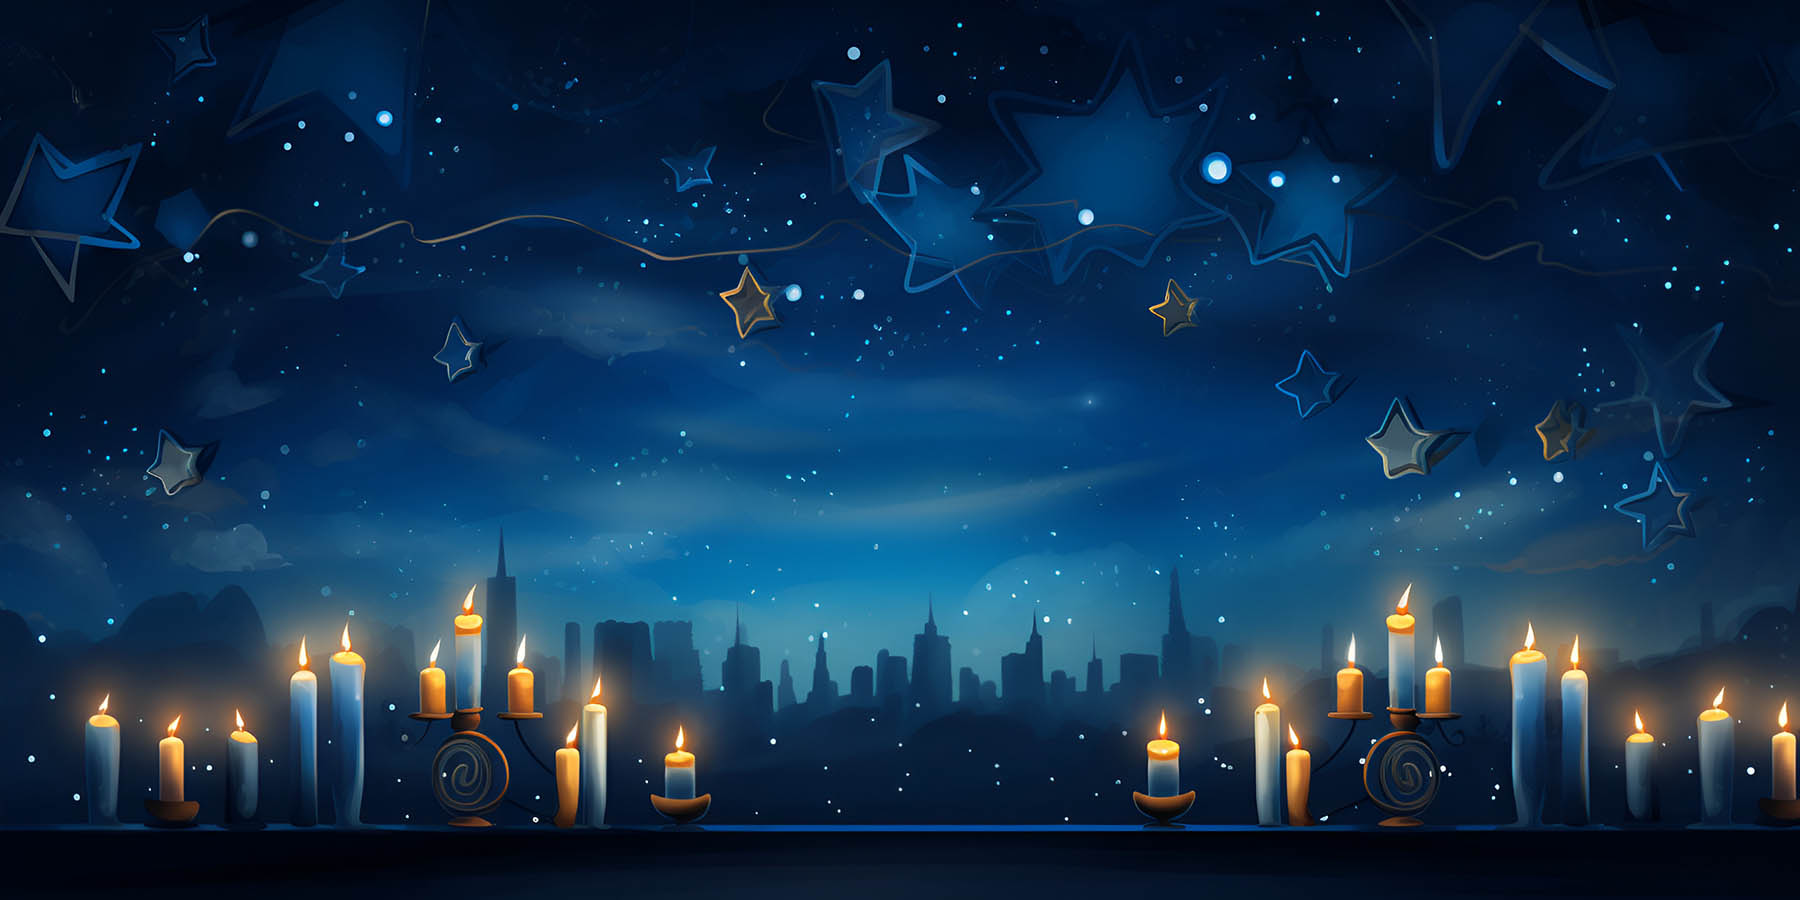 Celebrate Hanukkah with These Stunning Festival of Lights Decor Ideas